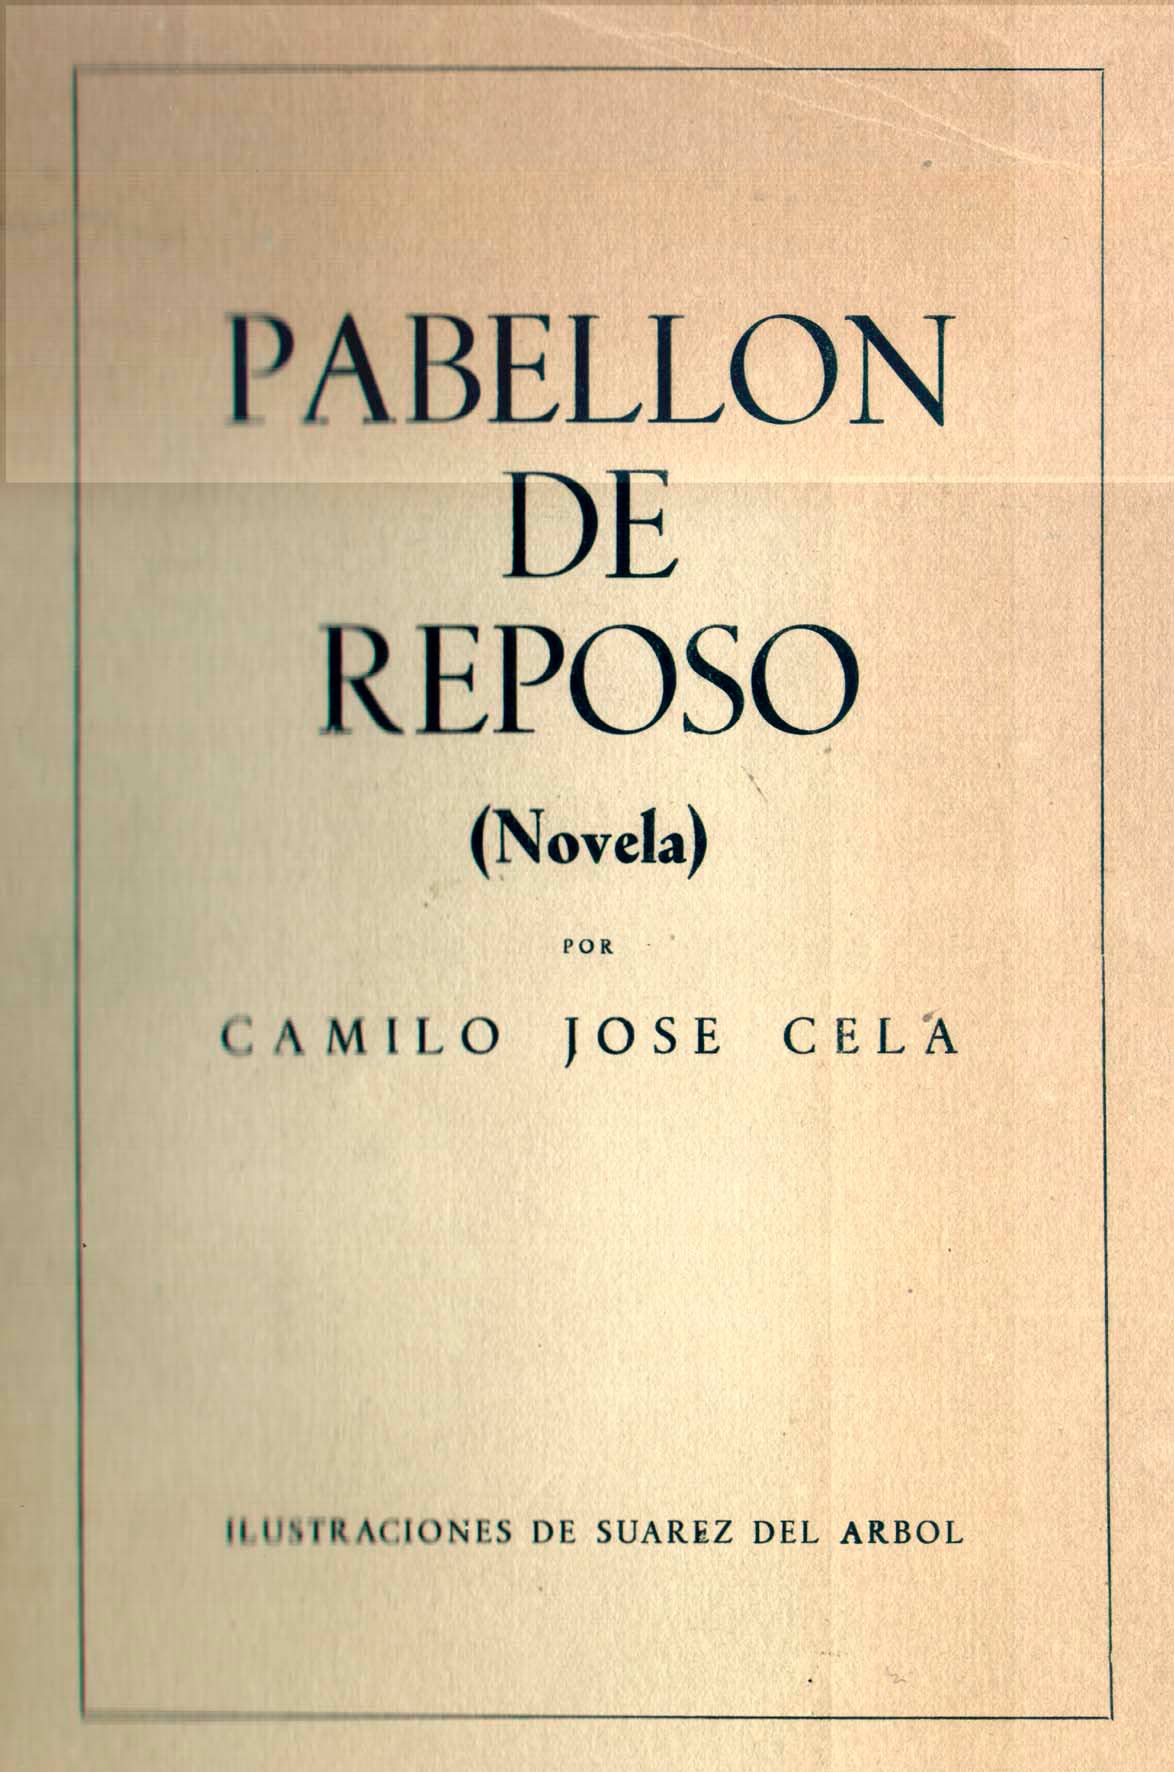 Pabellón de reposo , 1943. - Fundación Pública Camilo José Cela